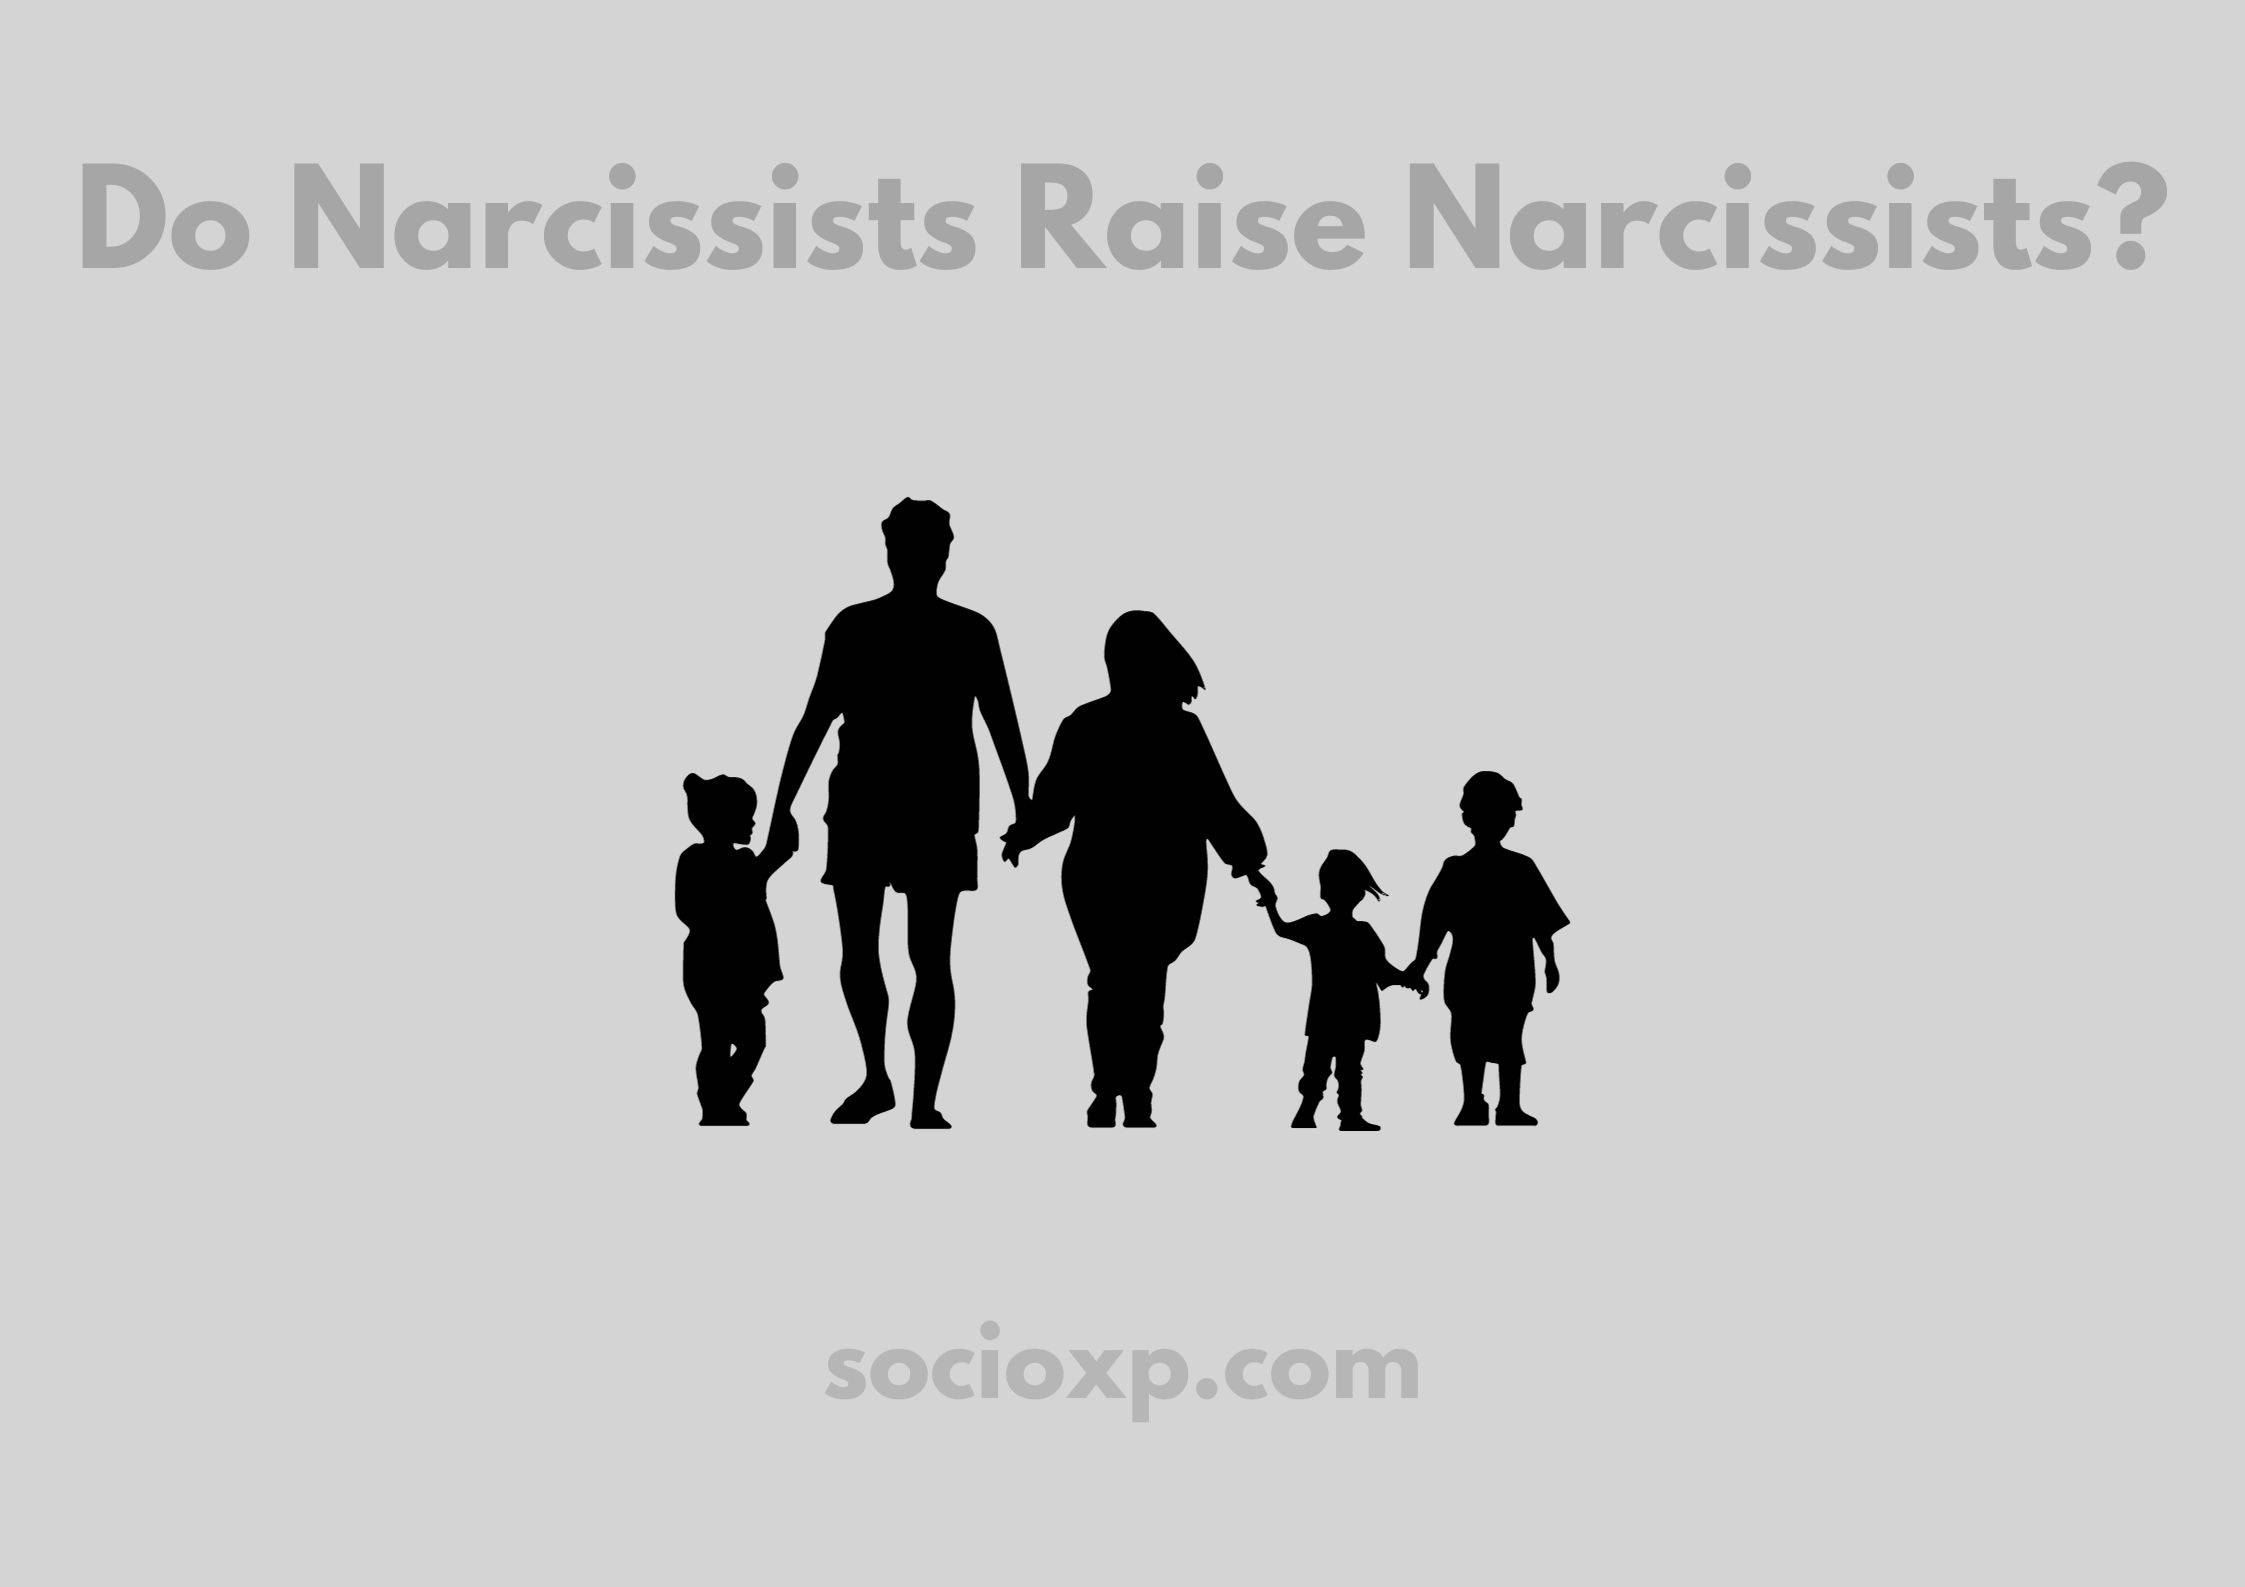 Do Narcissists Raise Narcissists?